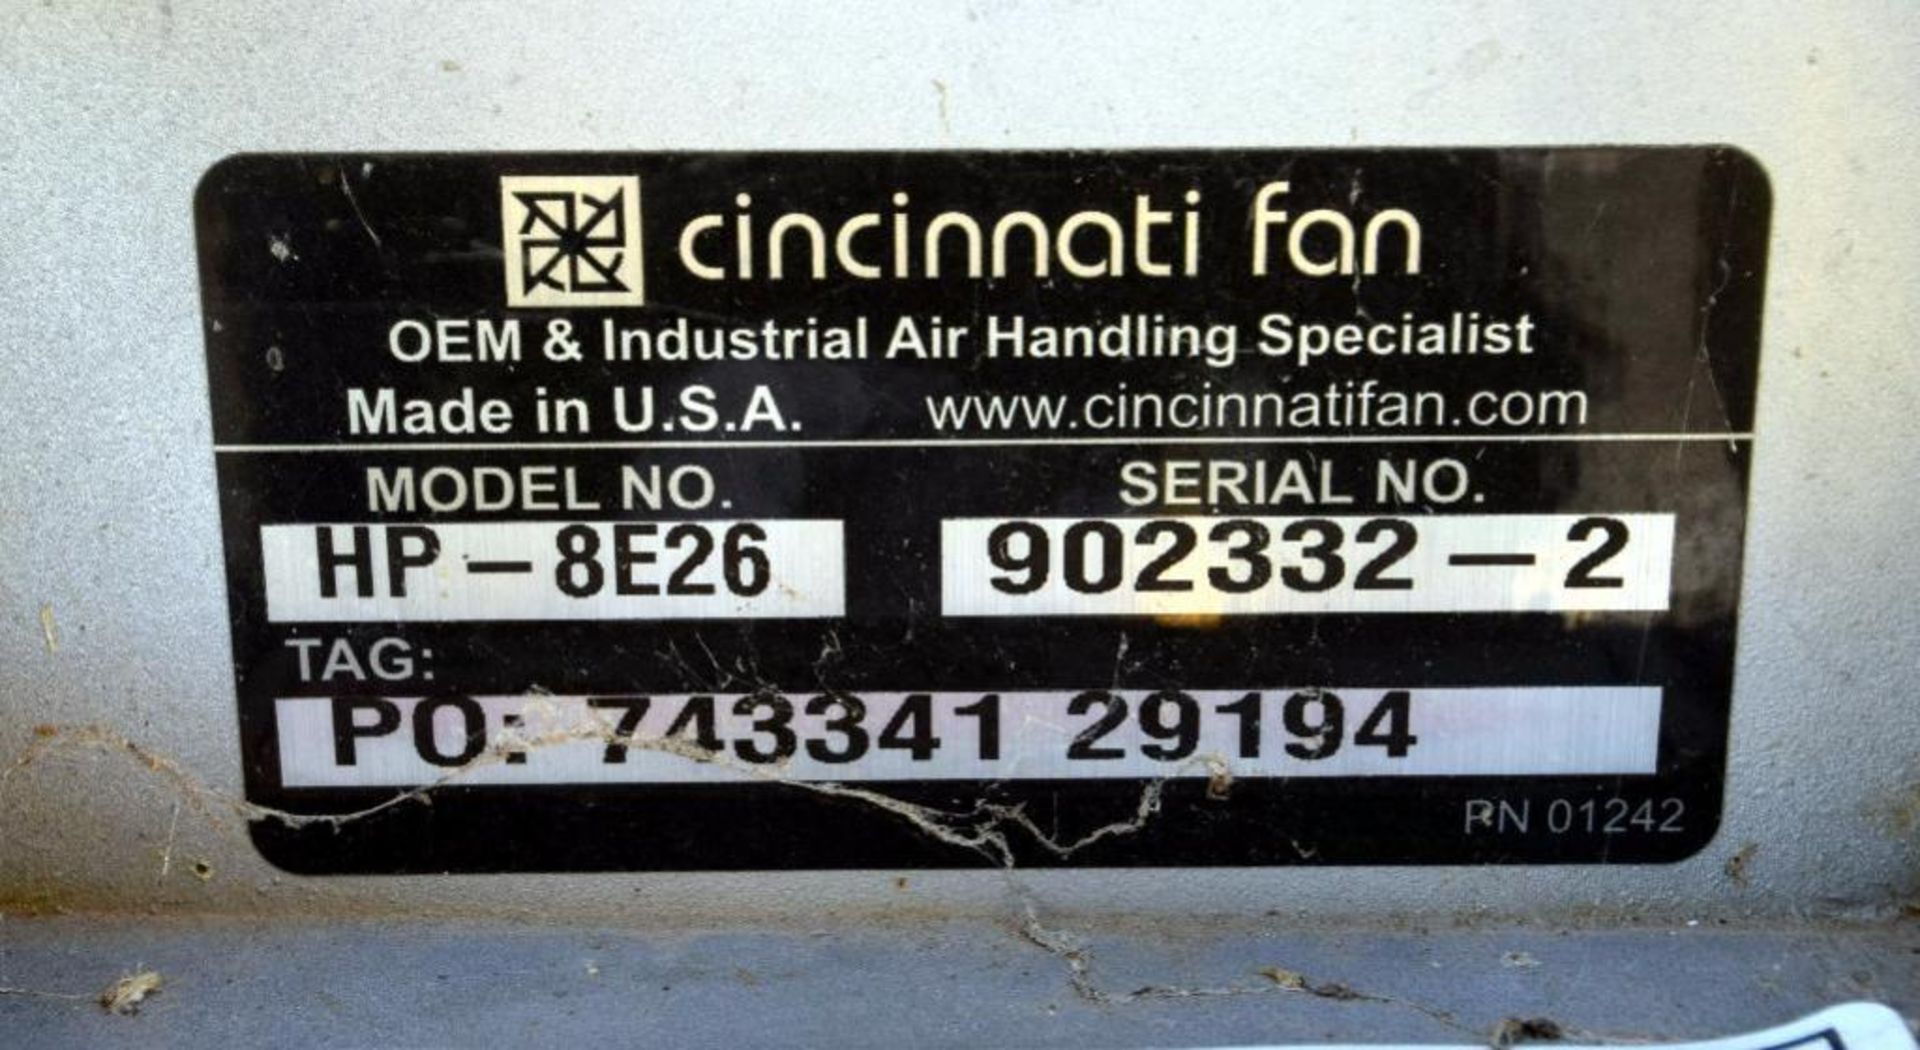 Cincinnati Fan High Pressure Blower, Model HP-8E26, Carbon Steel. Driven by a 10hp motor. Serial# 90 - Image 4 of 4